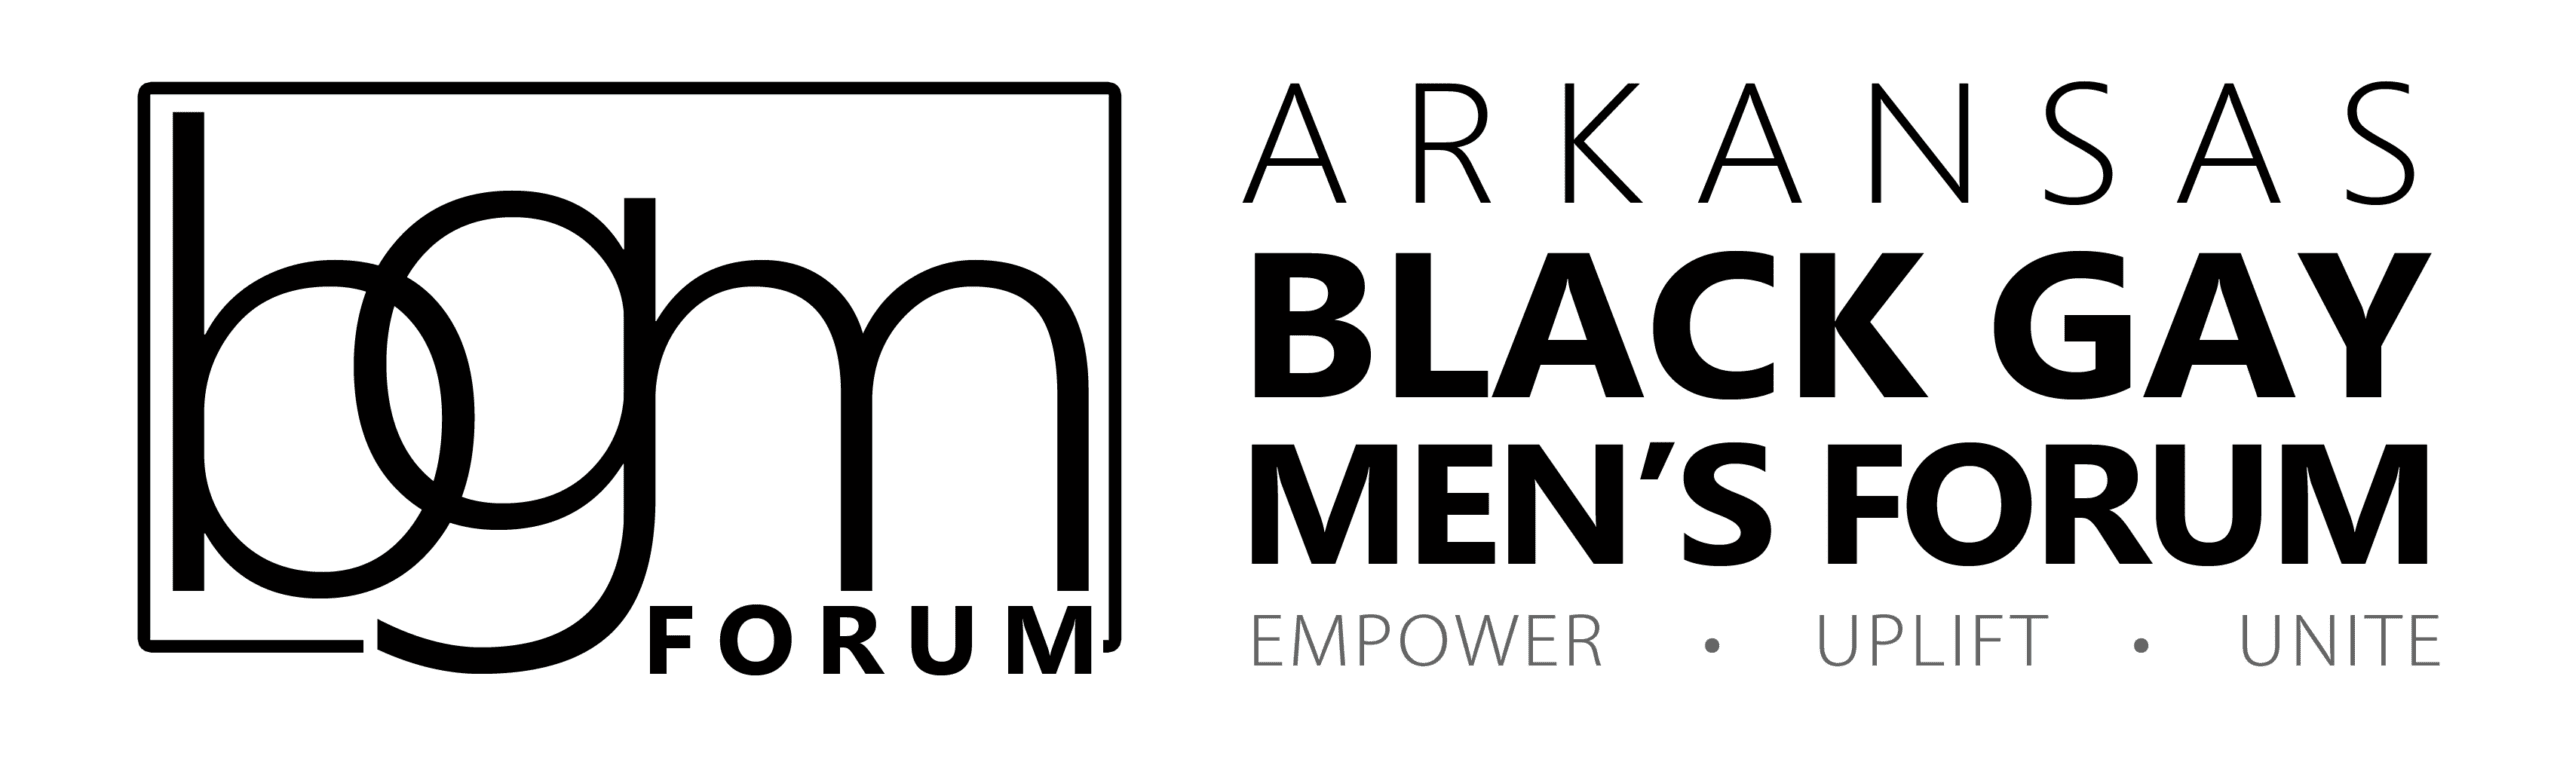 Arkansas Black Gay Men’s Forum Image